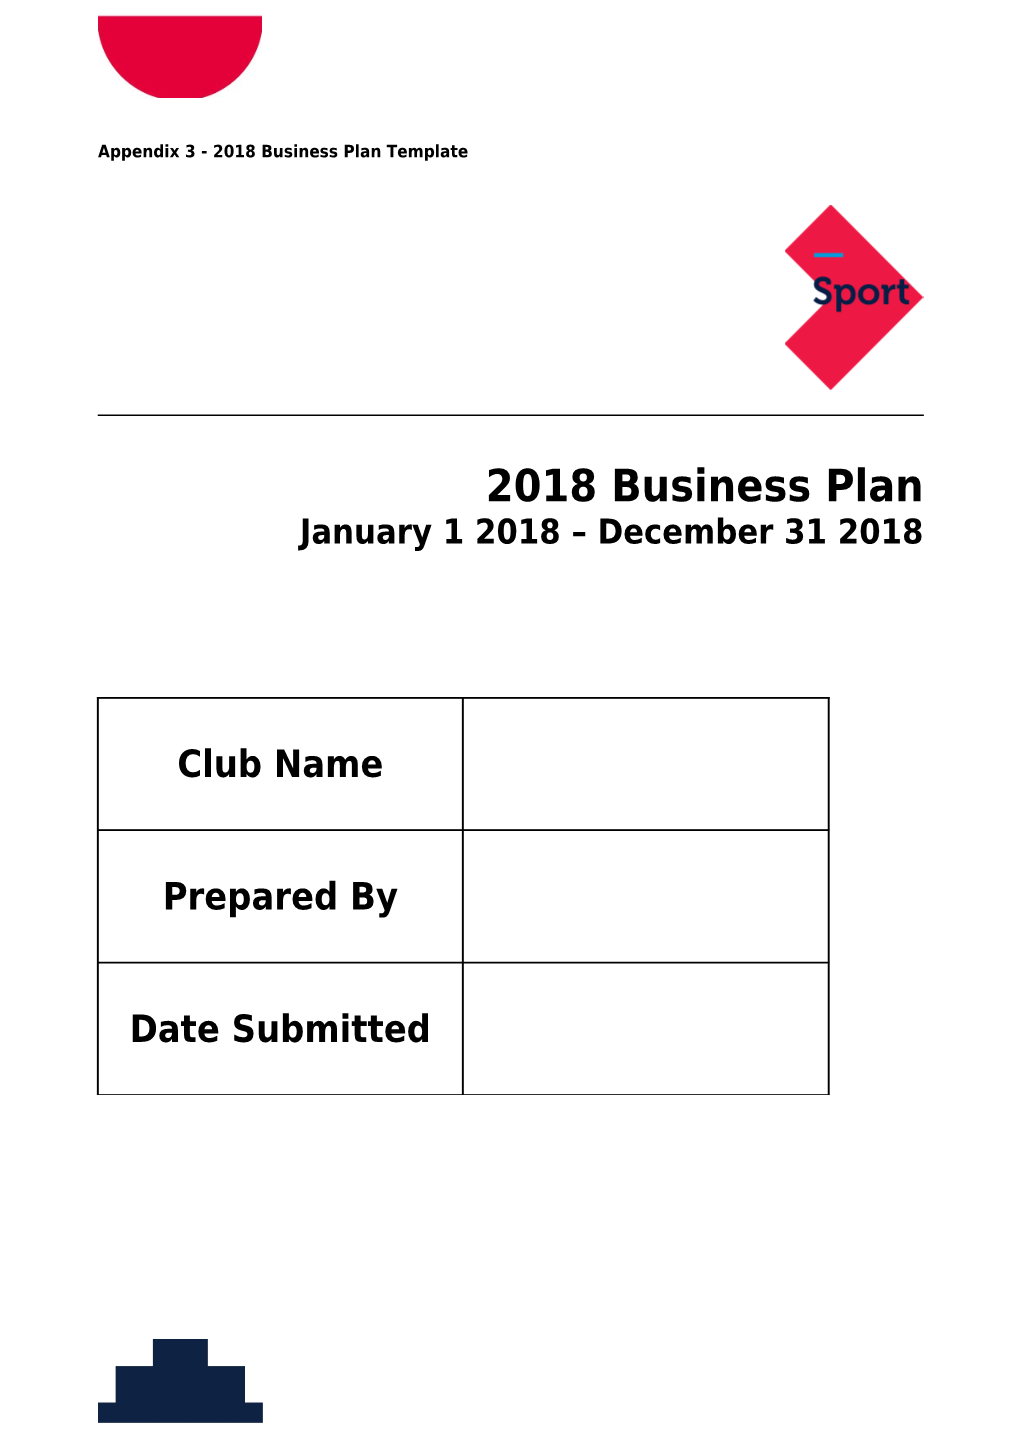 Appendix 3 - 2018 Business Plan Template